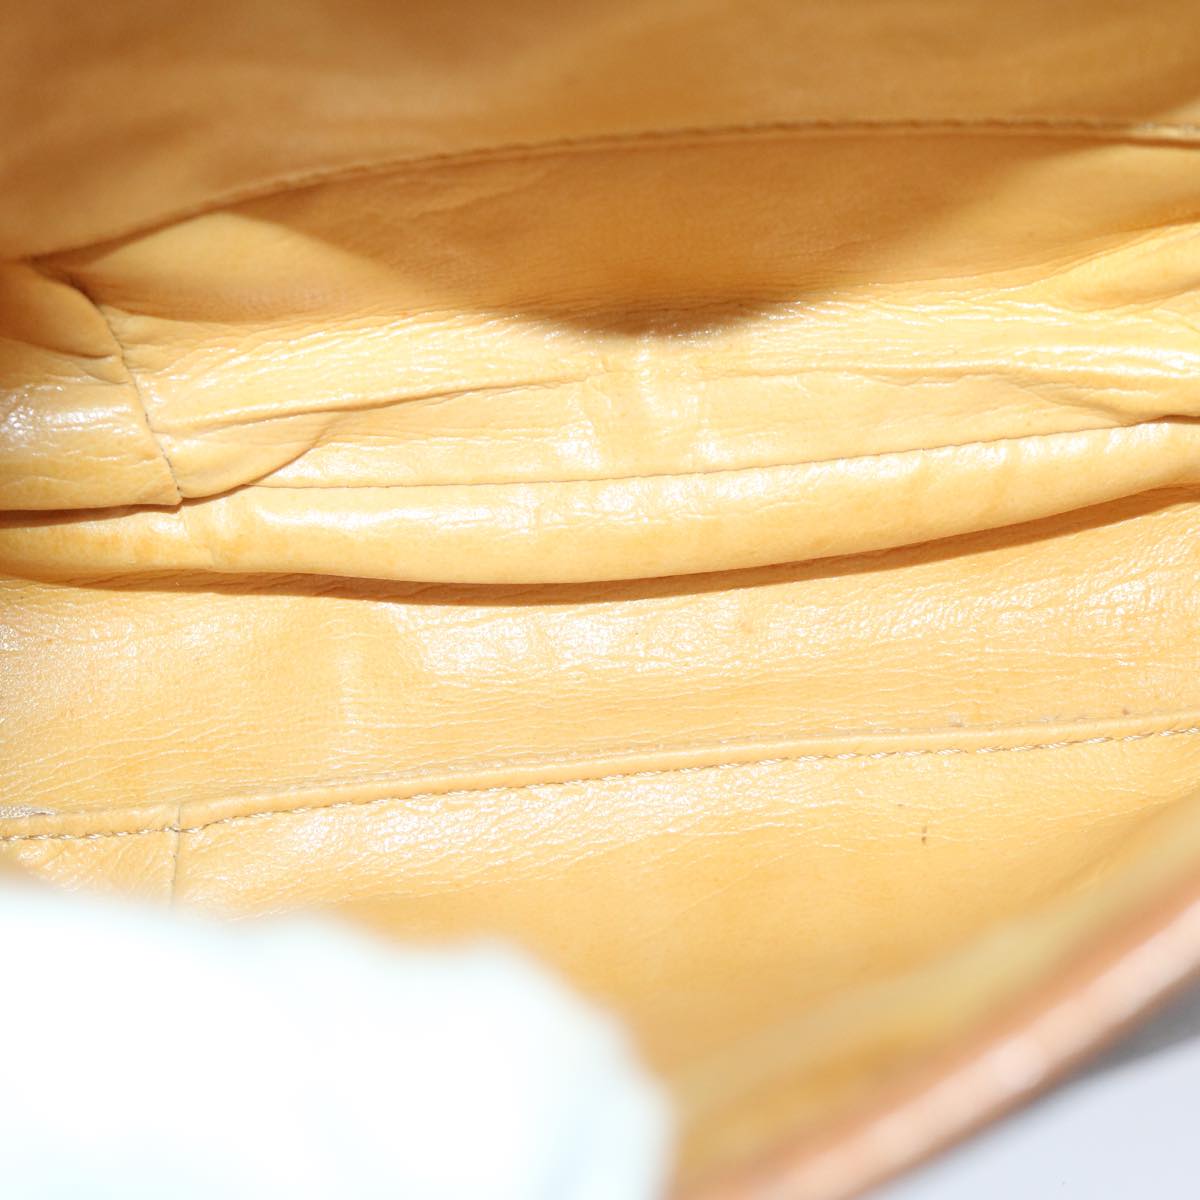 CELINE Macadam Canvas Shoulder Bag PVC Leather Brown Auth yk11066